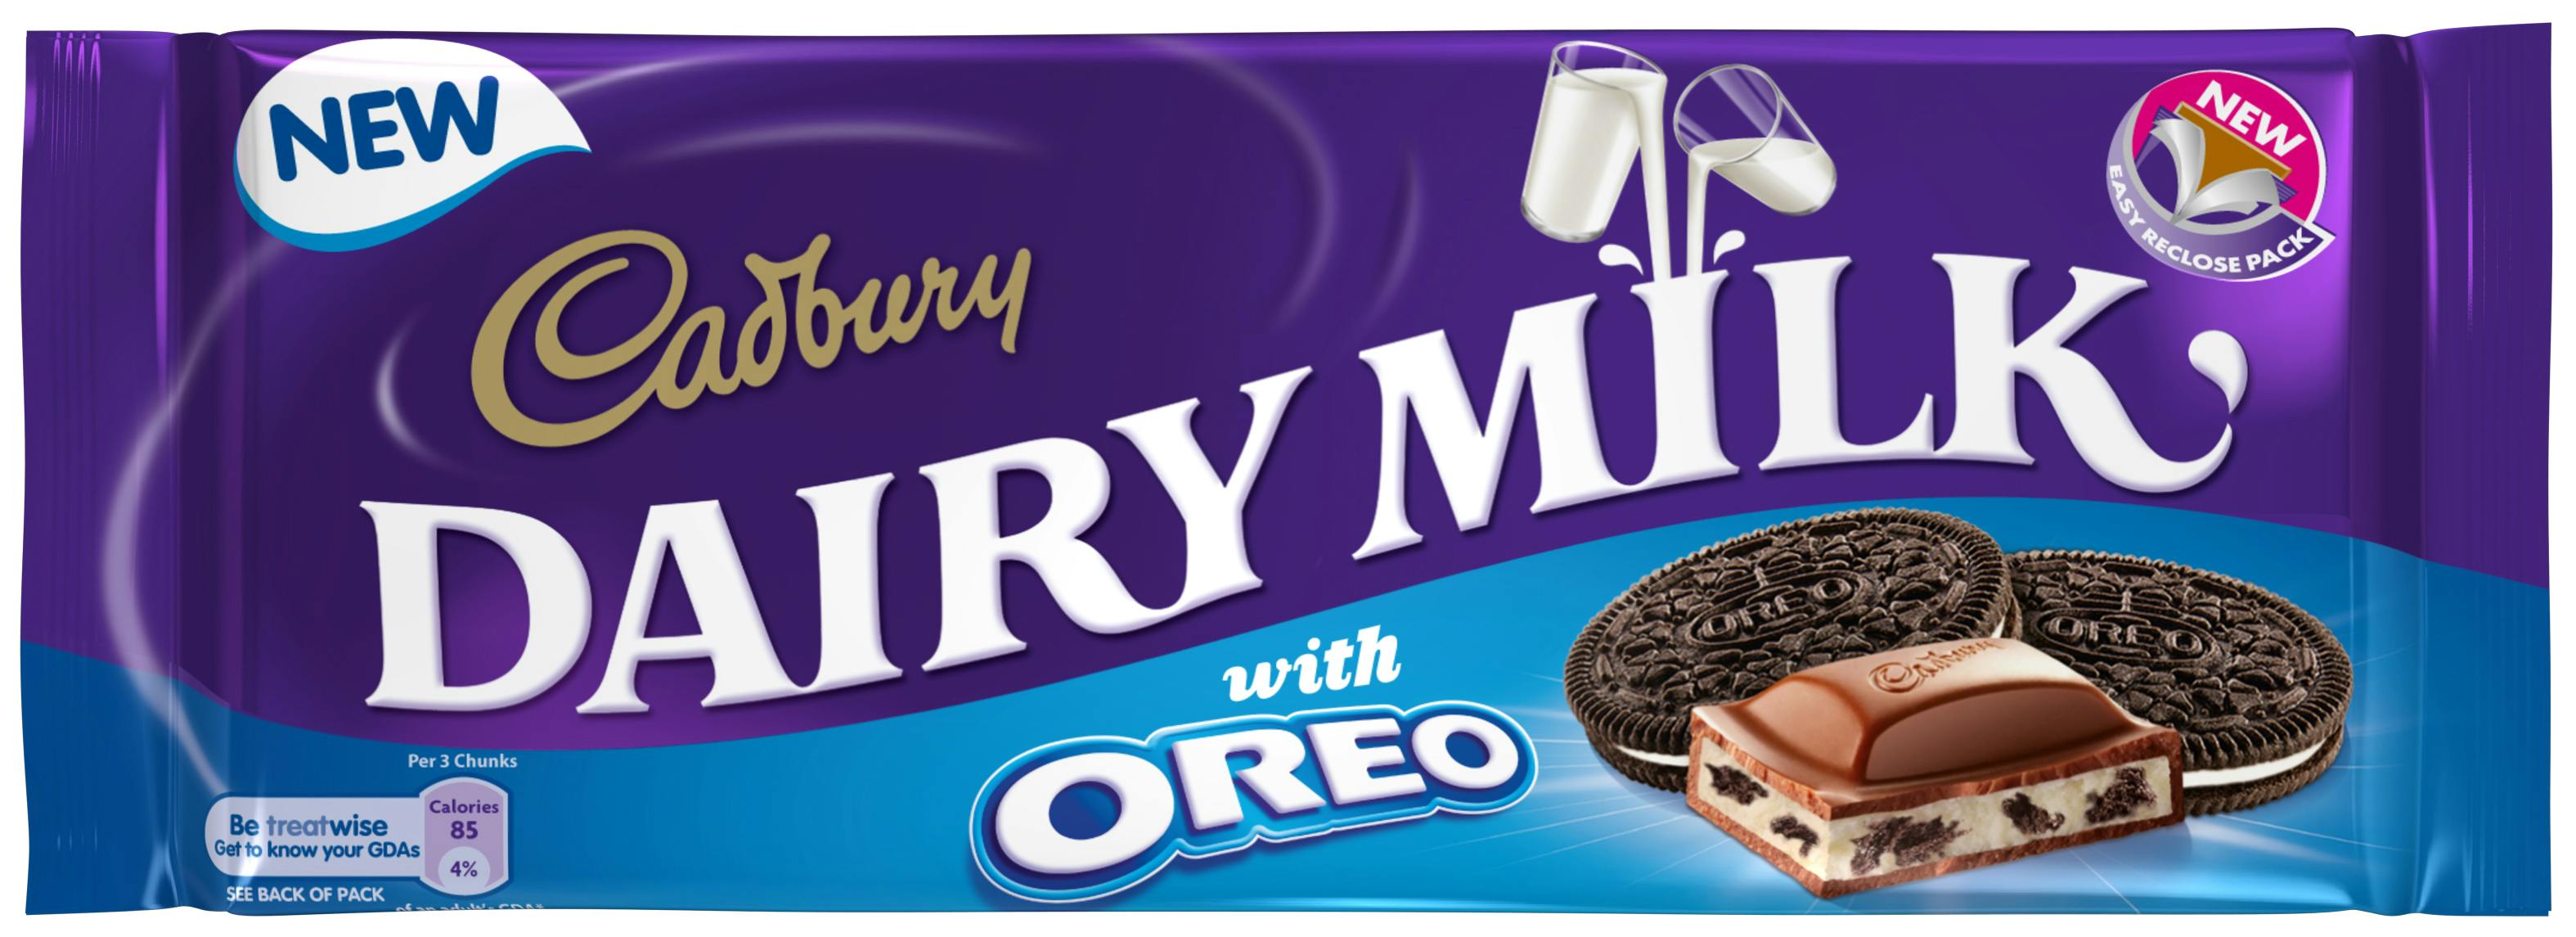 Cadbury Oreo Dipped Moments Gift Pack, 400 g - Price History